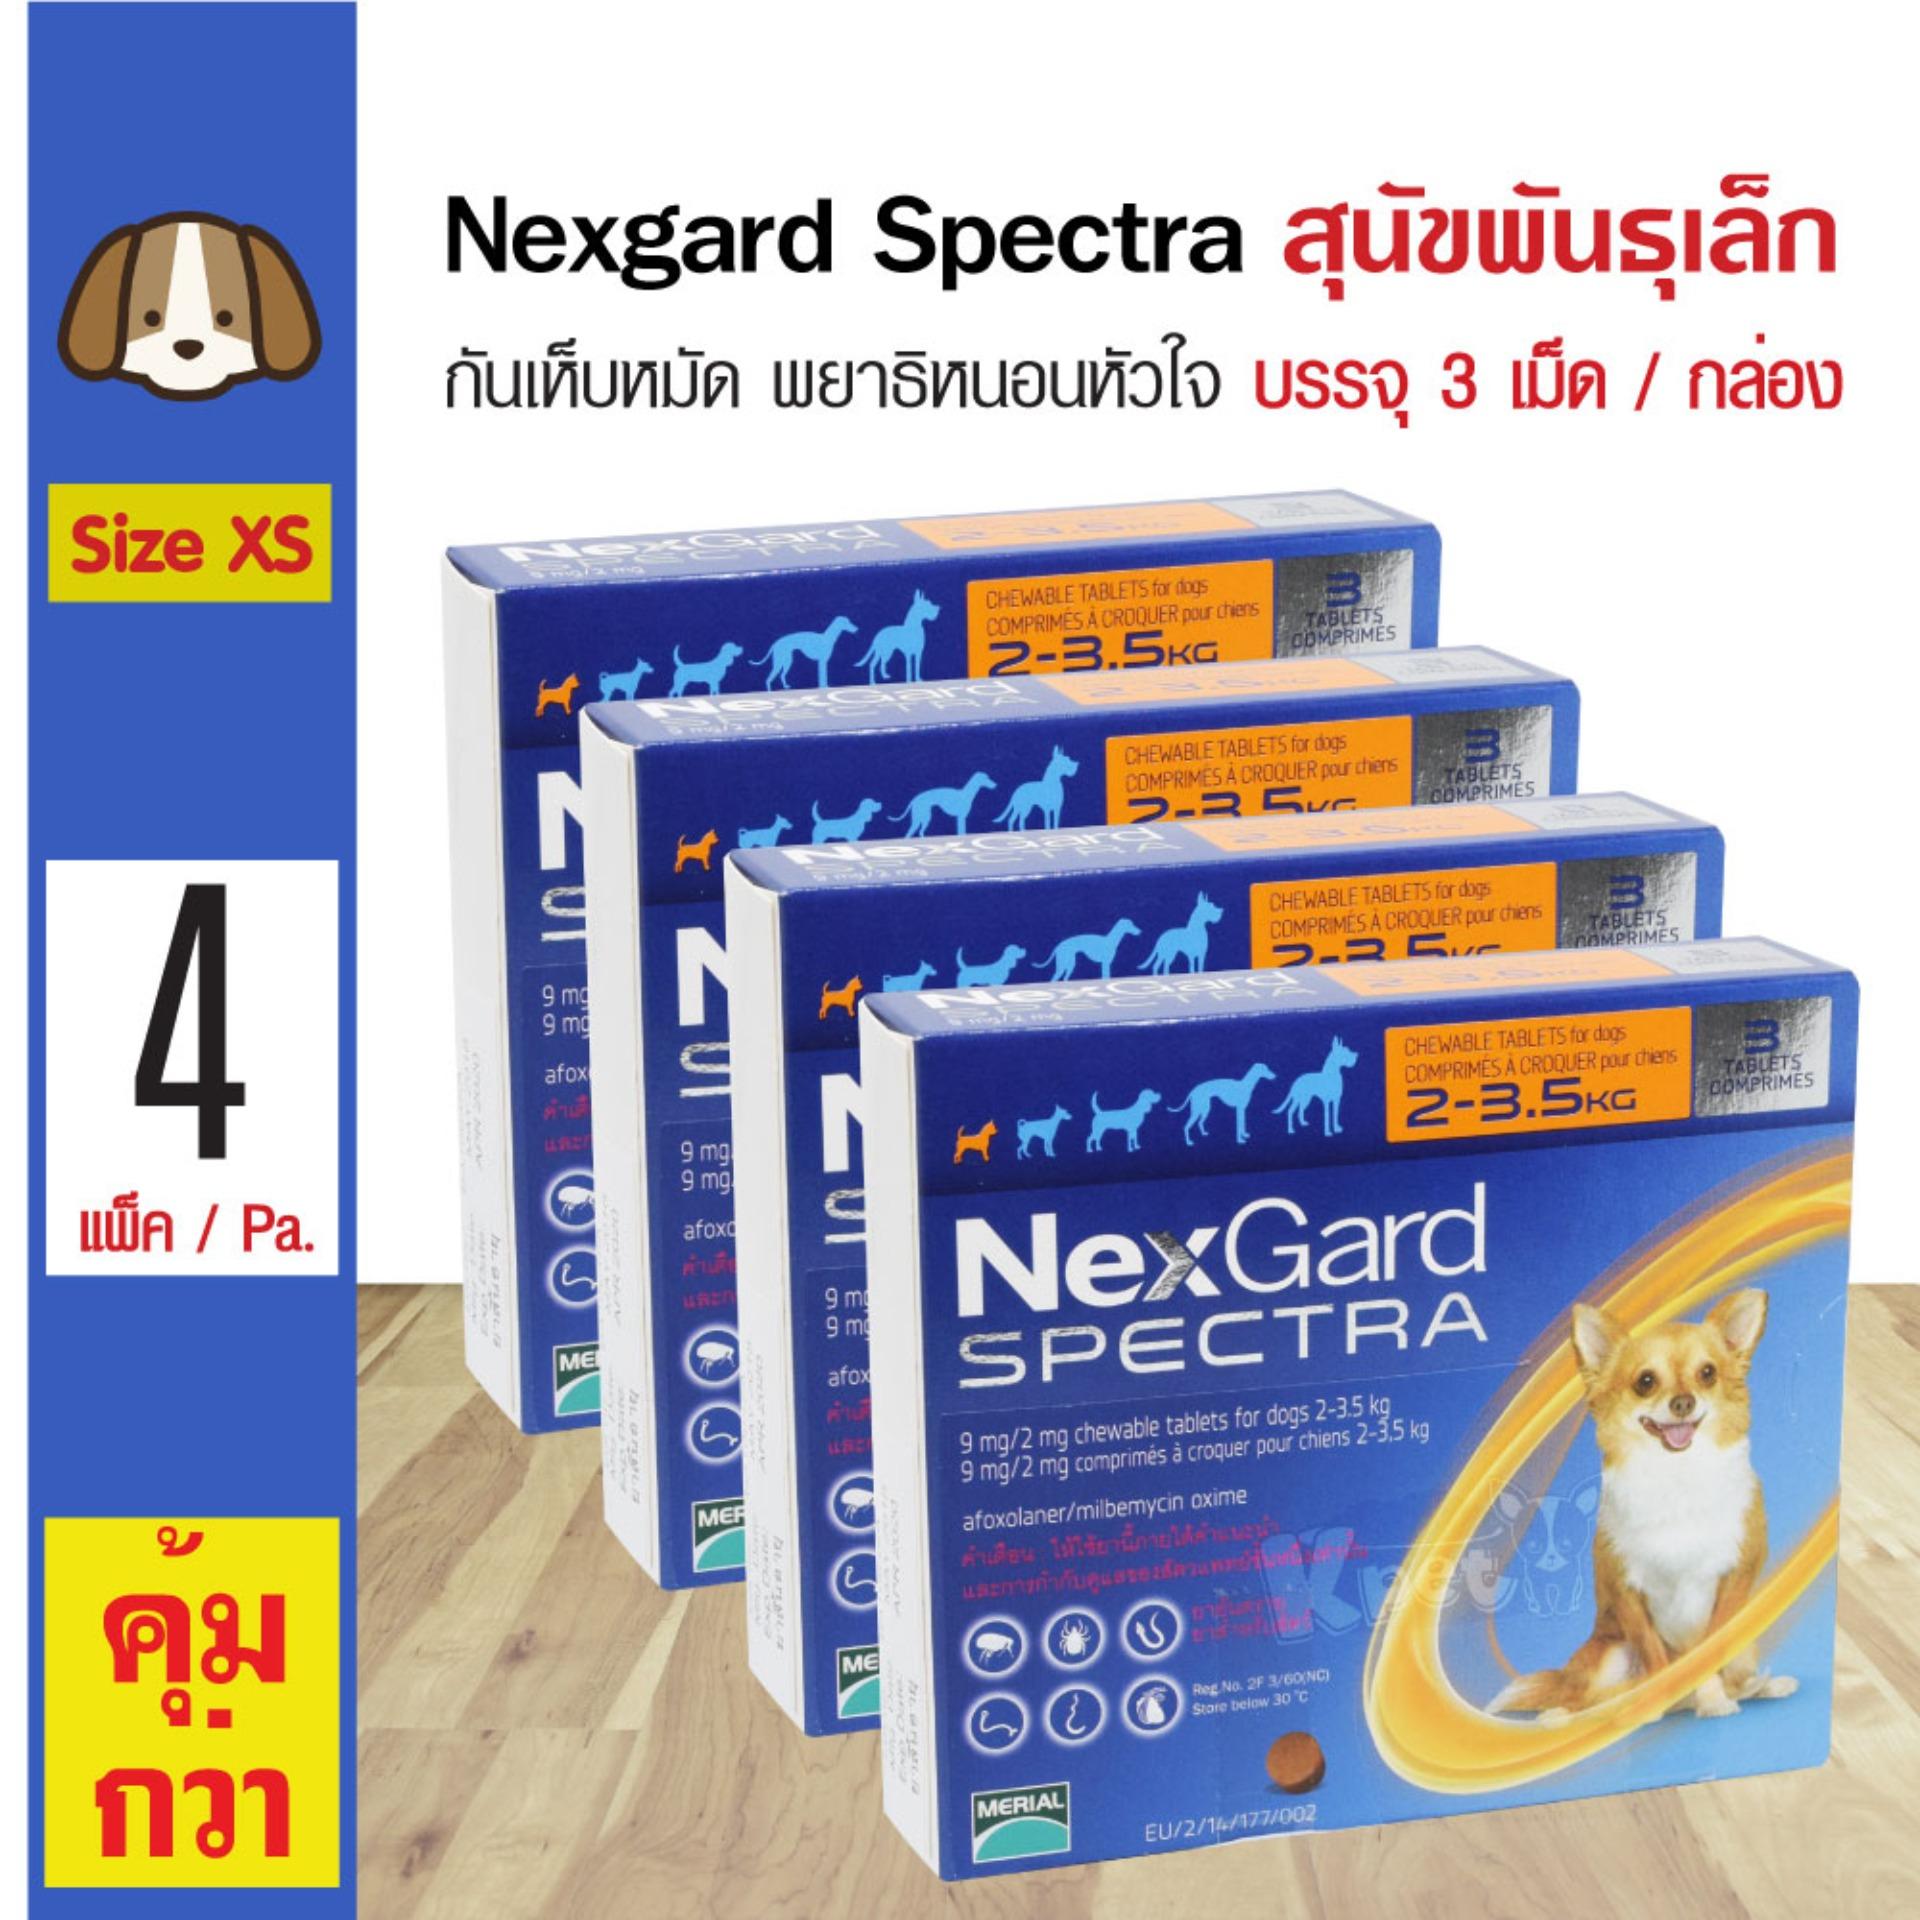 Nexgard Spectra Dog 2-3.5 Kg. สำหรับสุนัขพันธุ์เล็ก น้ำหนัก 2-3.5 Kg. (3 เม็ด/กล่อง) x 4 กล่อง